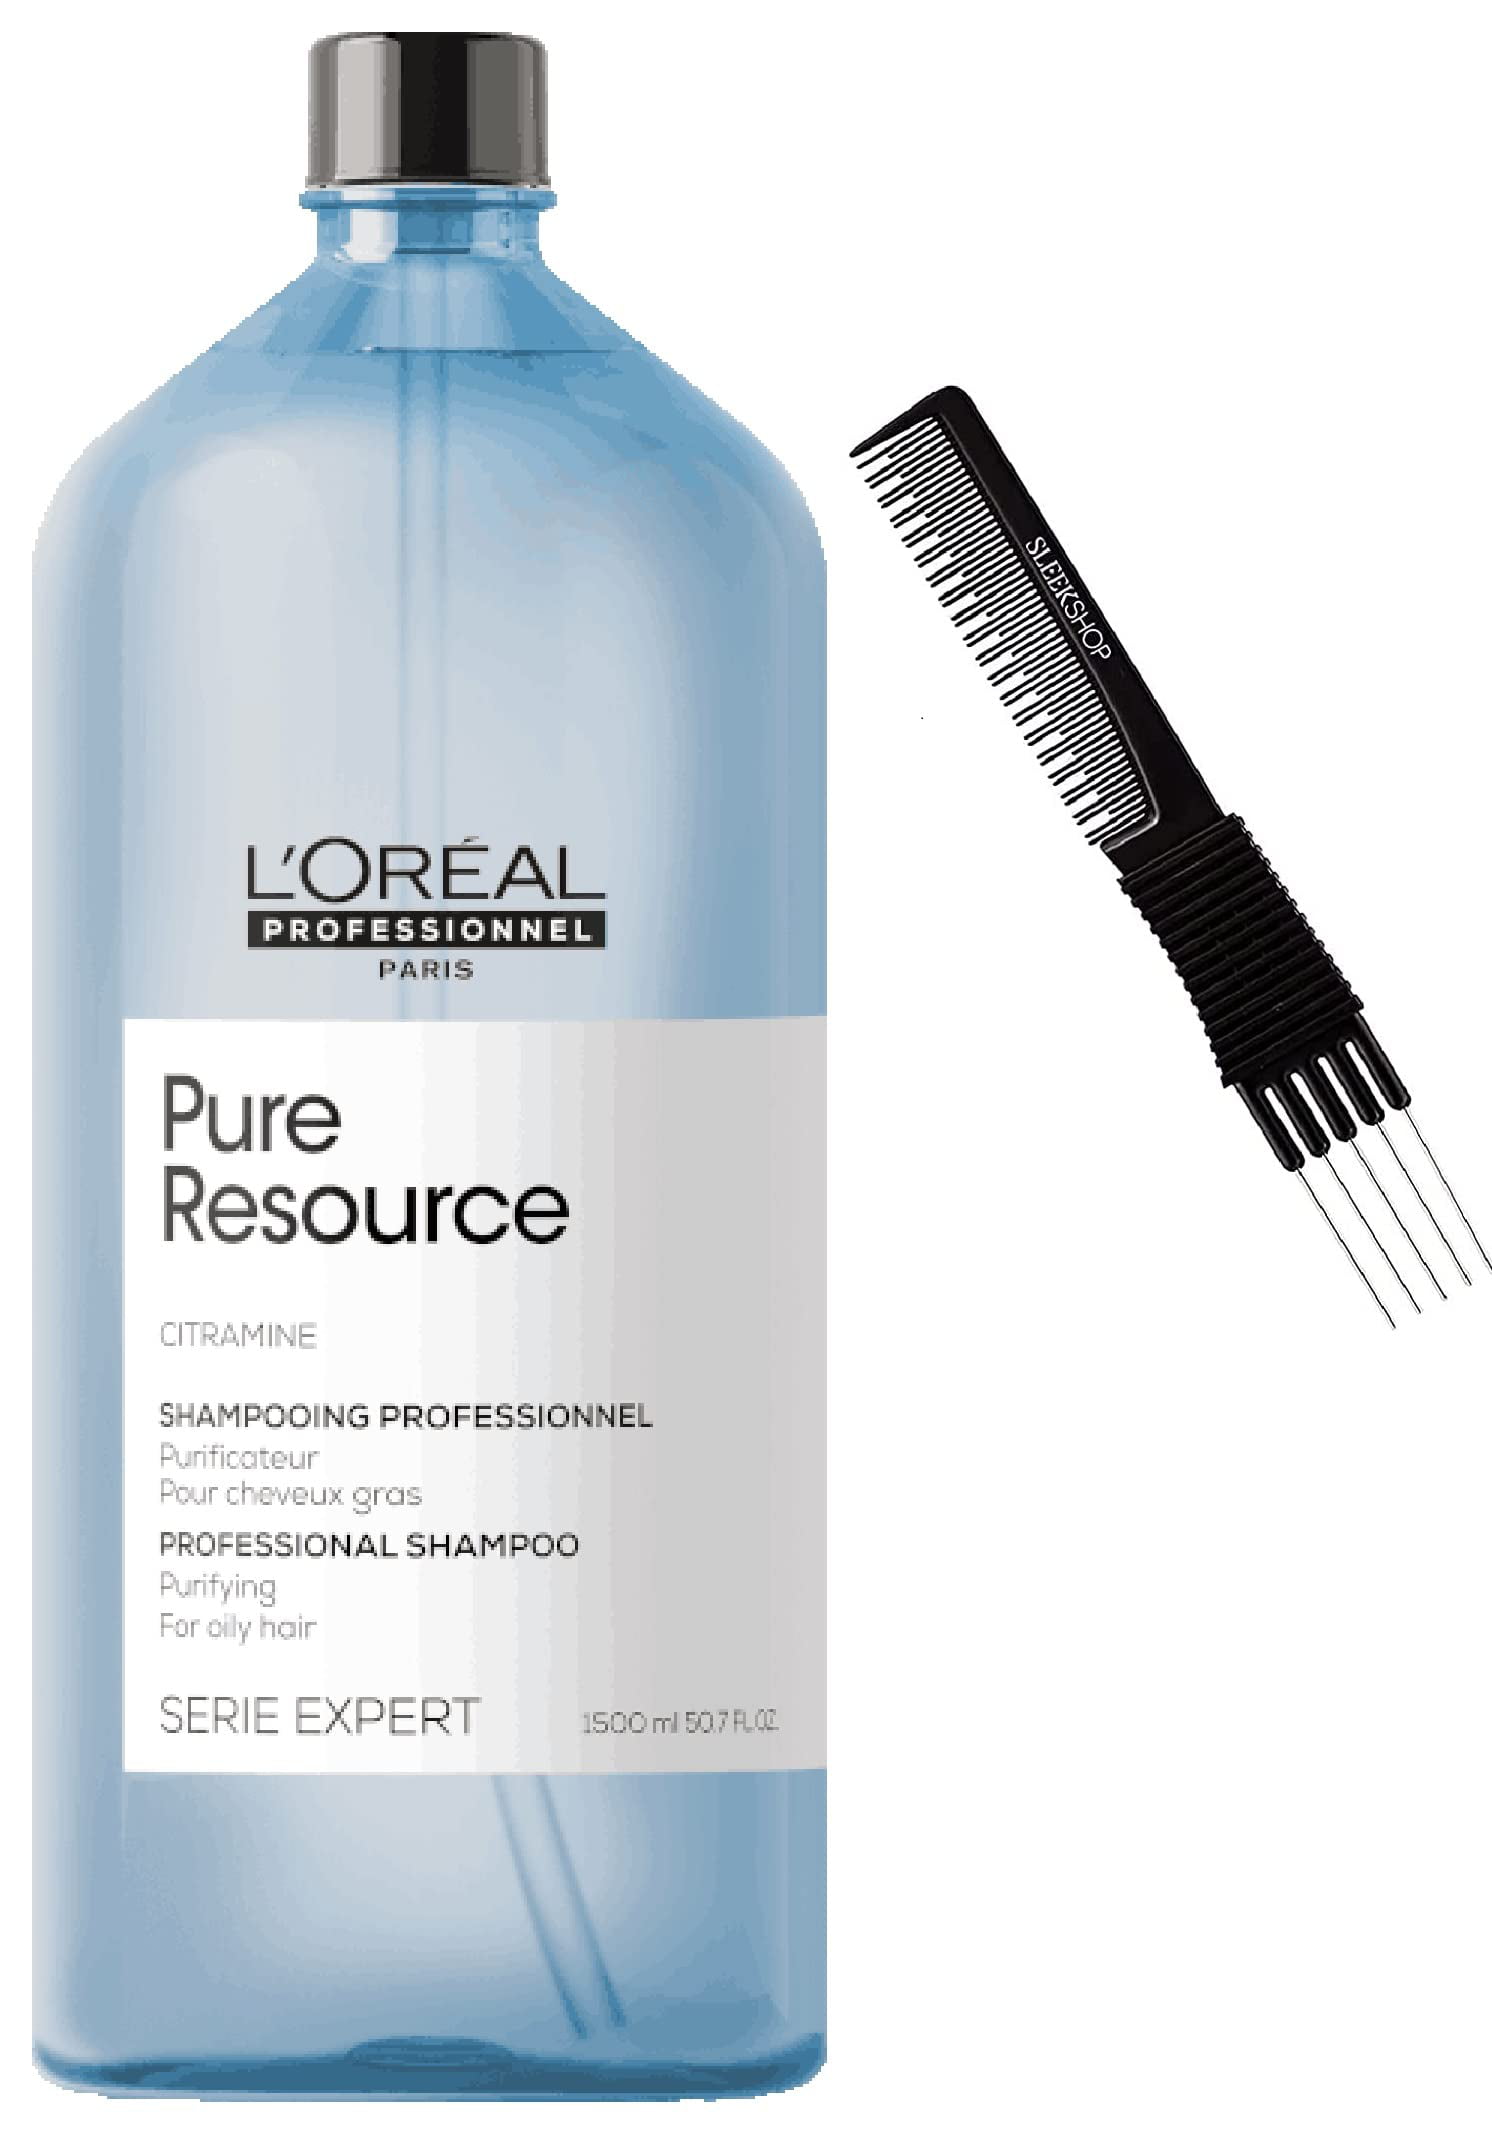 L'oreal SERIE EXPERT Pure Resource Citramine Professional Purifying Hair (w/ Sleek Loreal Teasing Comb) RESOURCE SHAMPOO - 50.7 oz / 1500ml) - Walmart.com